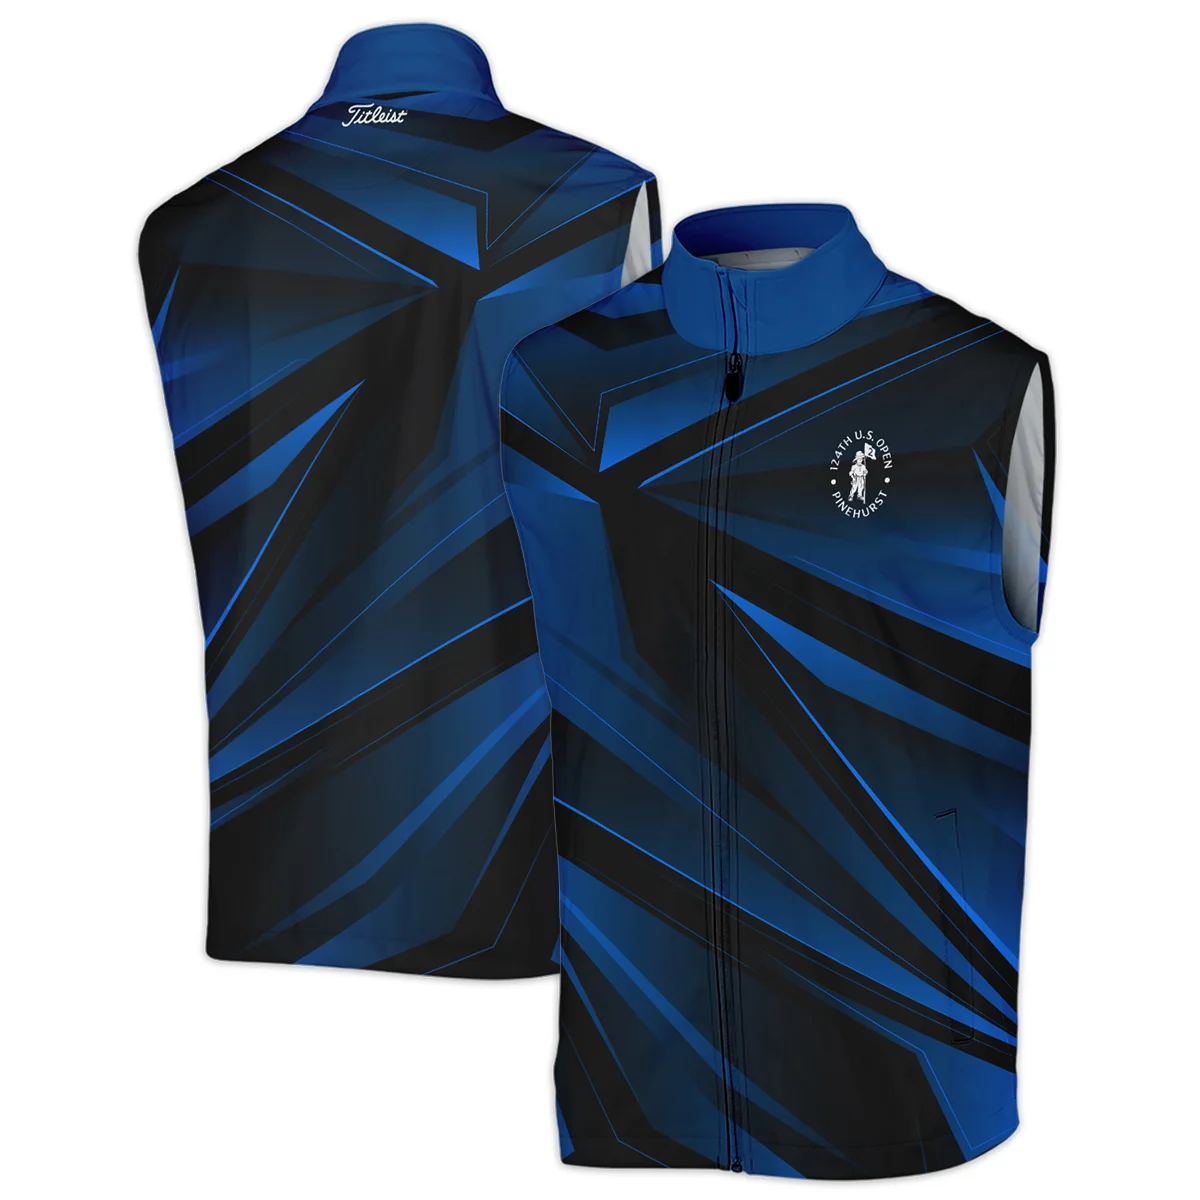 Titleist 124th U.S. Open Pinehurst Dark Blue Gradient Sublimation Zipper Hoodie Shirt Style Classic